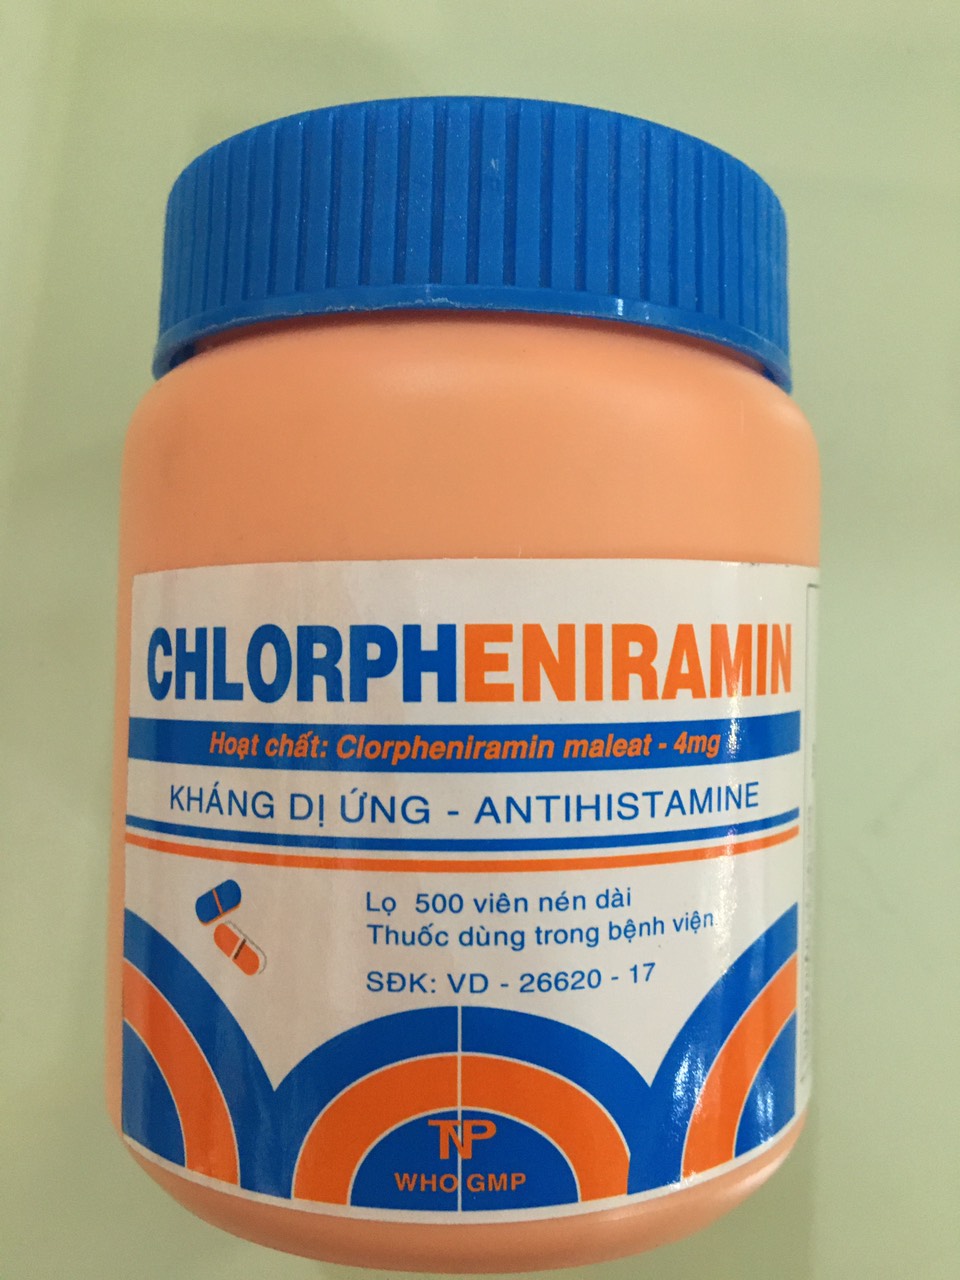 chlorpheniramin-4mg-2-lop-500-vien